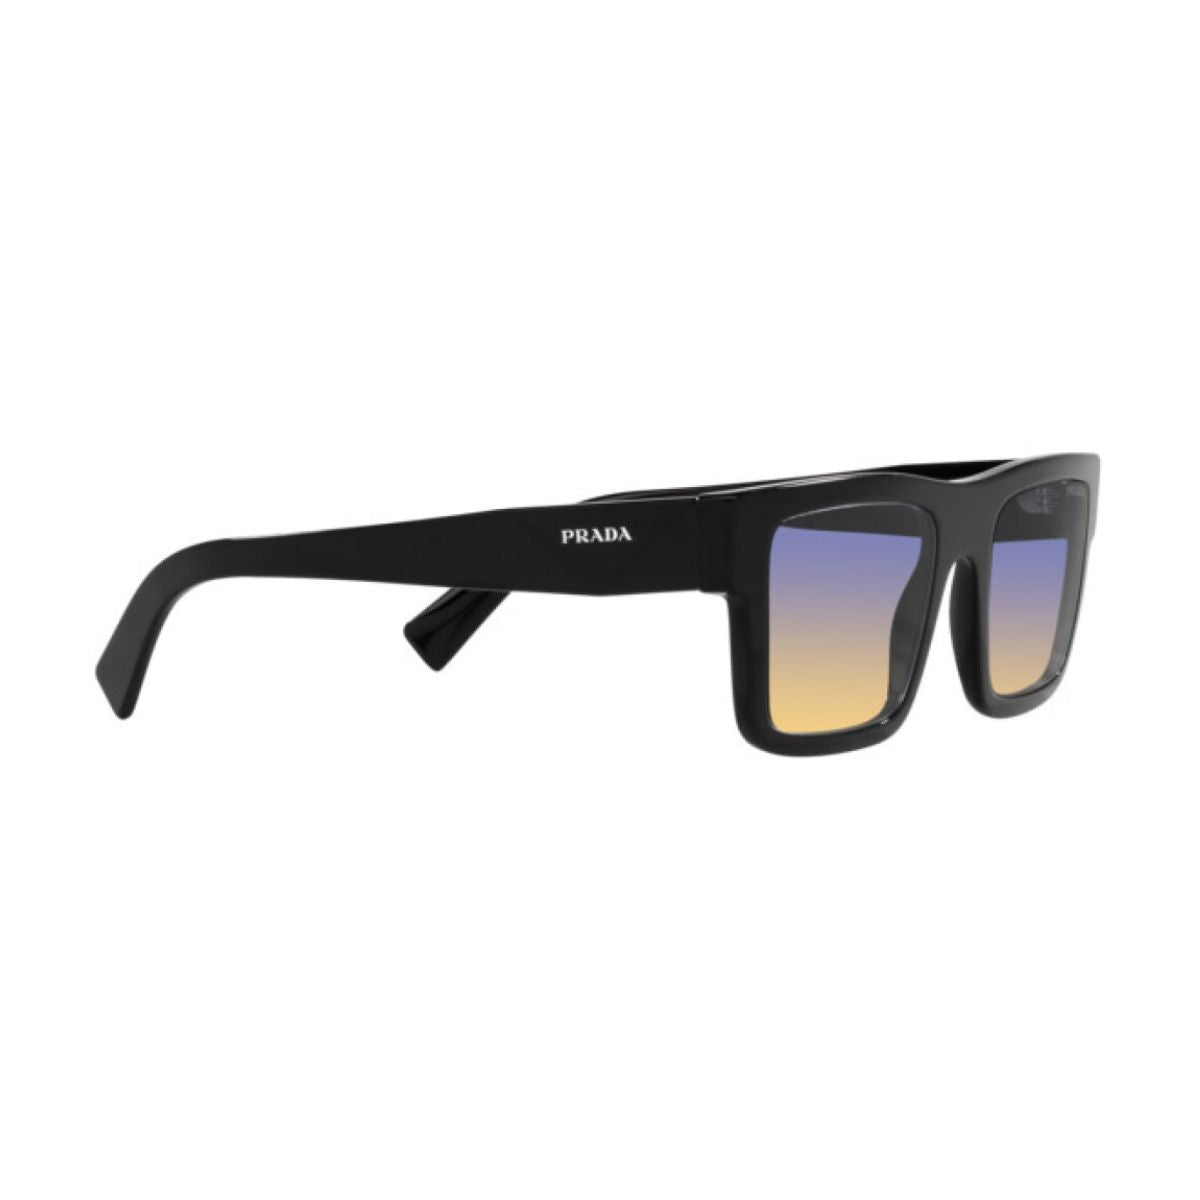 "Prada SPR19W 1AB-06Z UV Protection Square Sunglasses For Men's At Optorium"